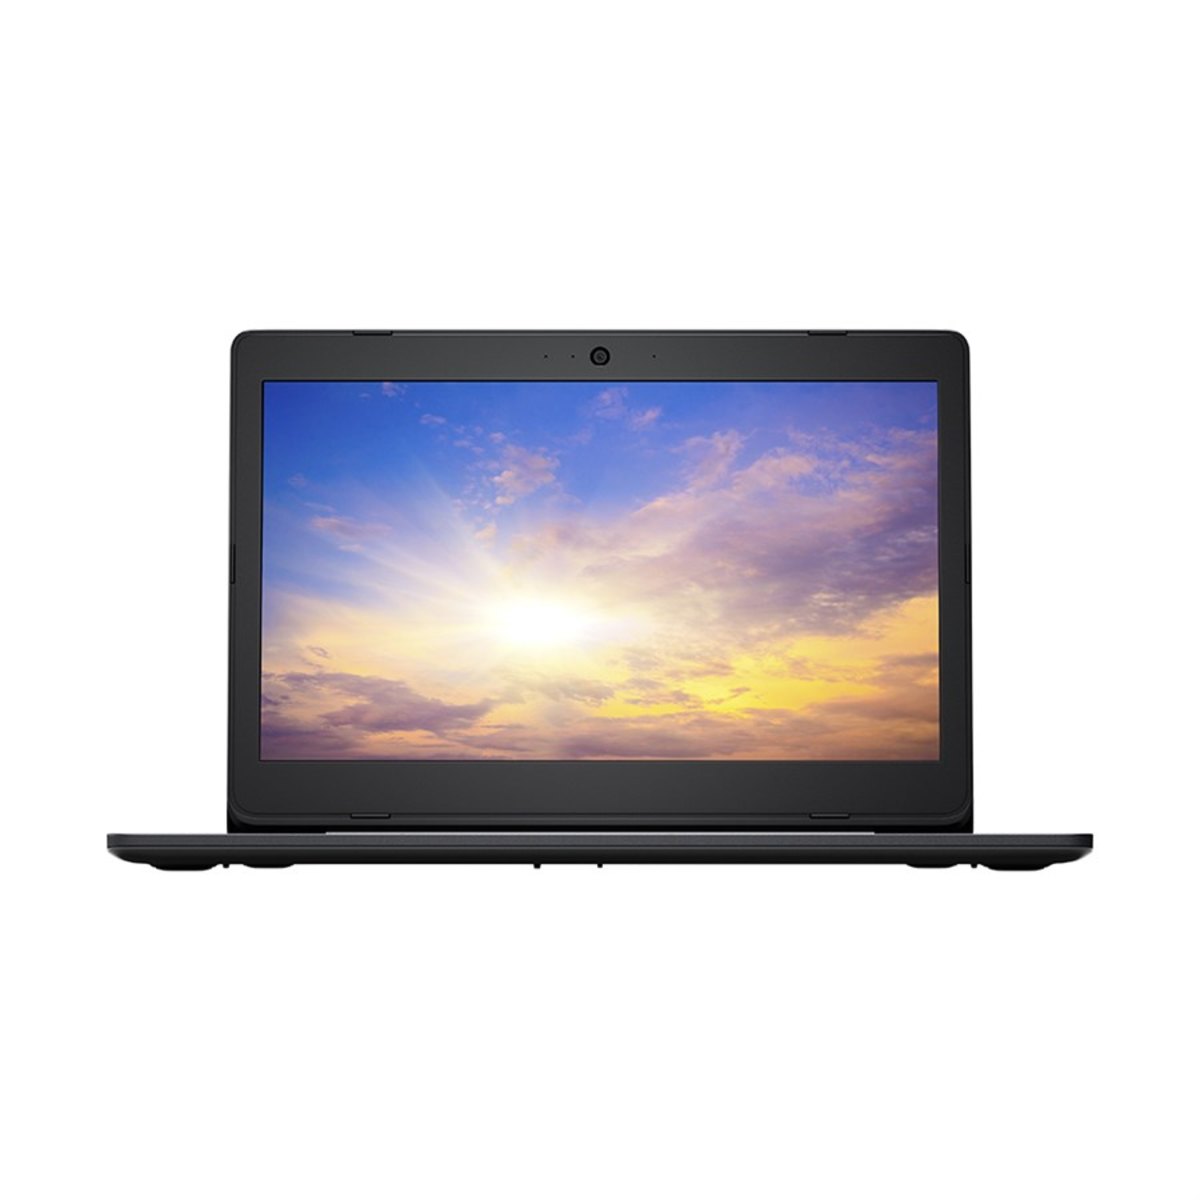 Notebook - Positivo Xci3620 Celeron N3010 1.04ghz 2gb 500gb Padrão Intel Hd Graphics 400 Linux Stilo 14" Polegadas